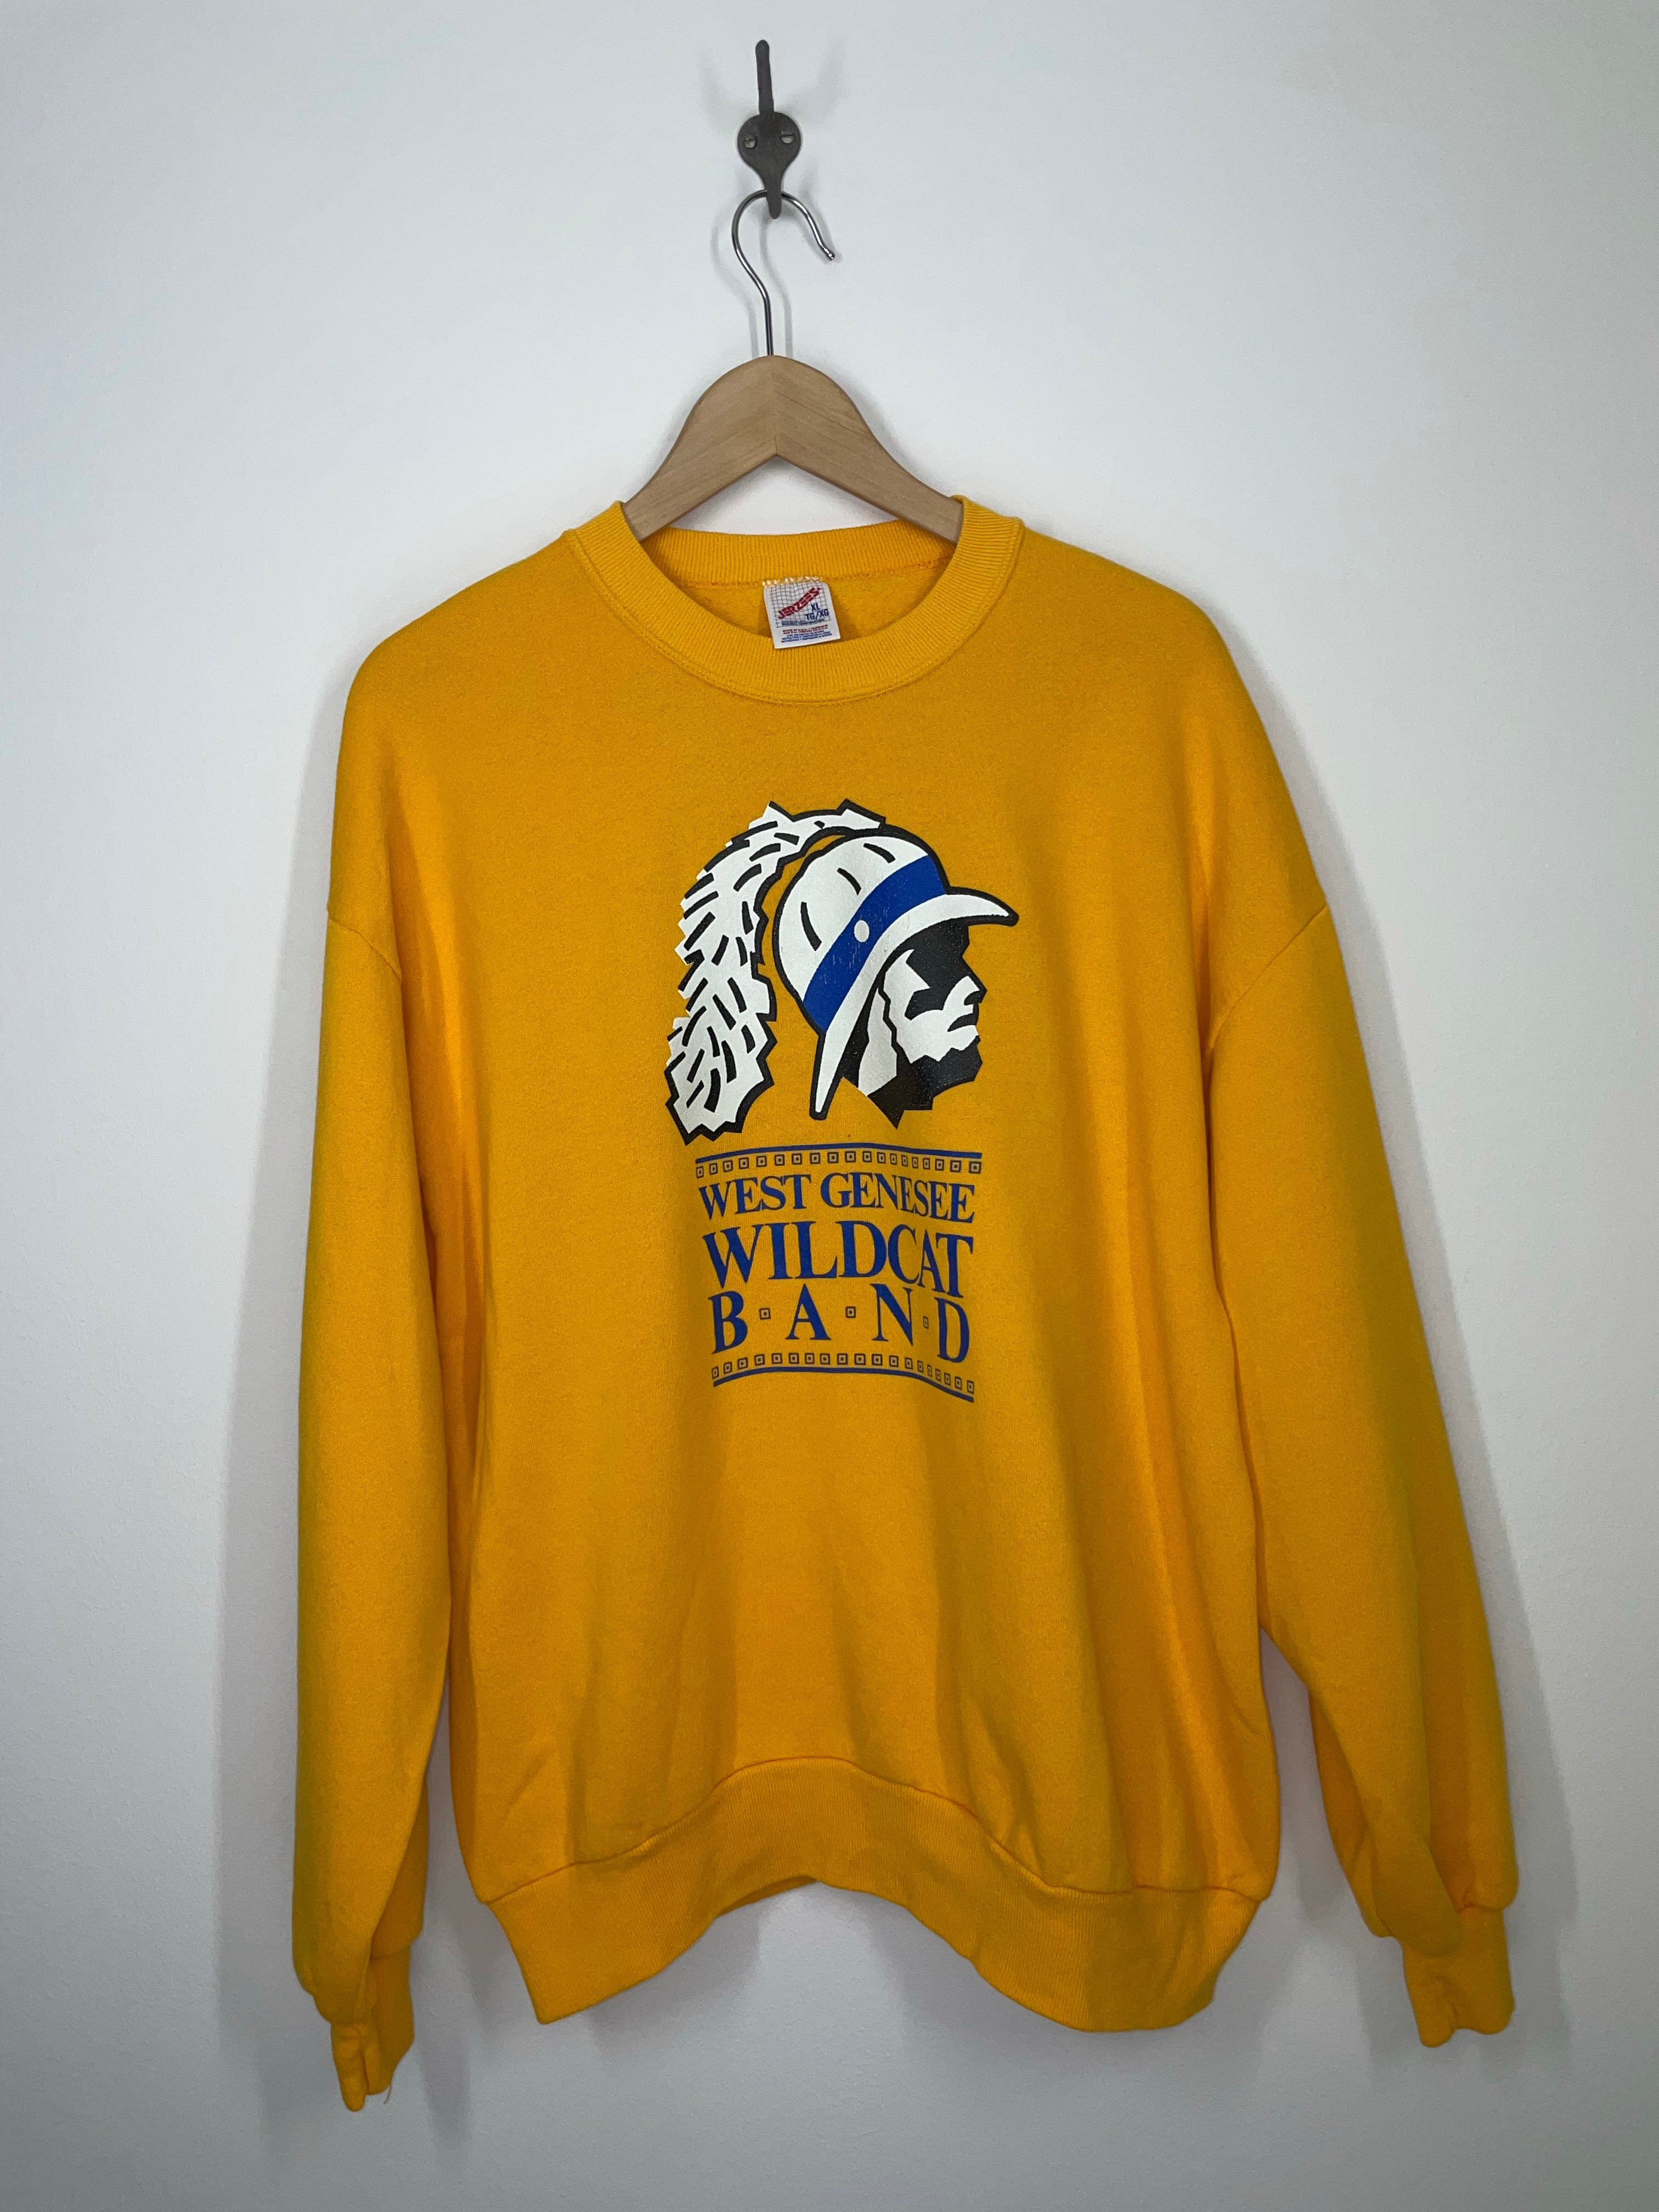 West Genesee Wildcat Marching Band Sweatshirt- Jerzees - XL